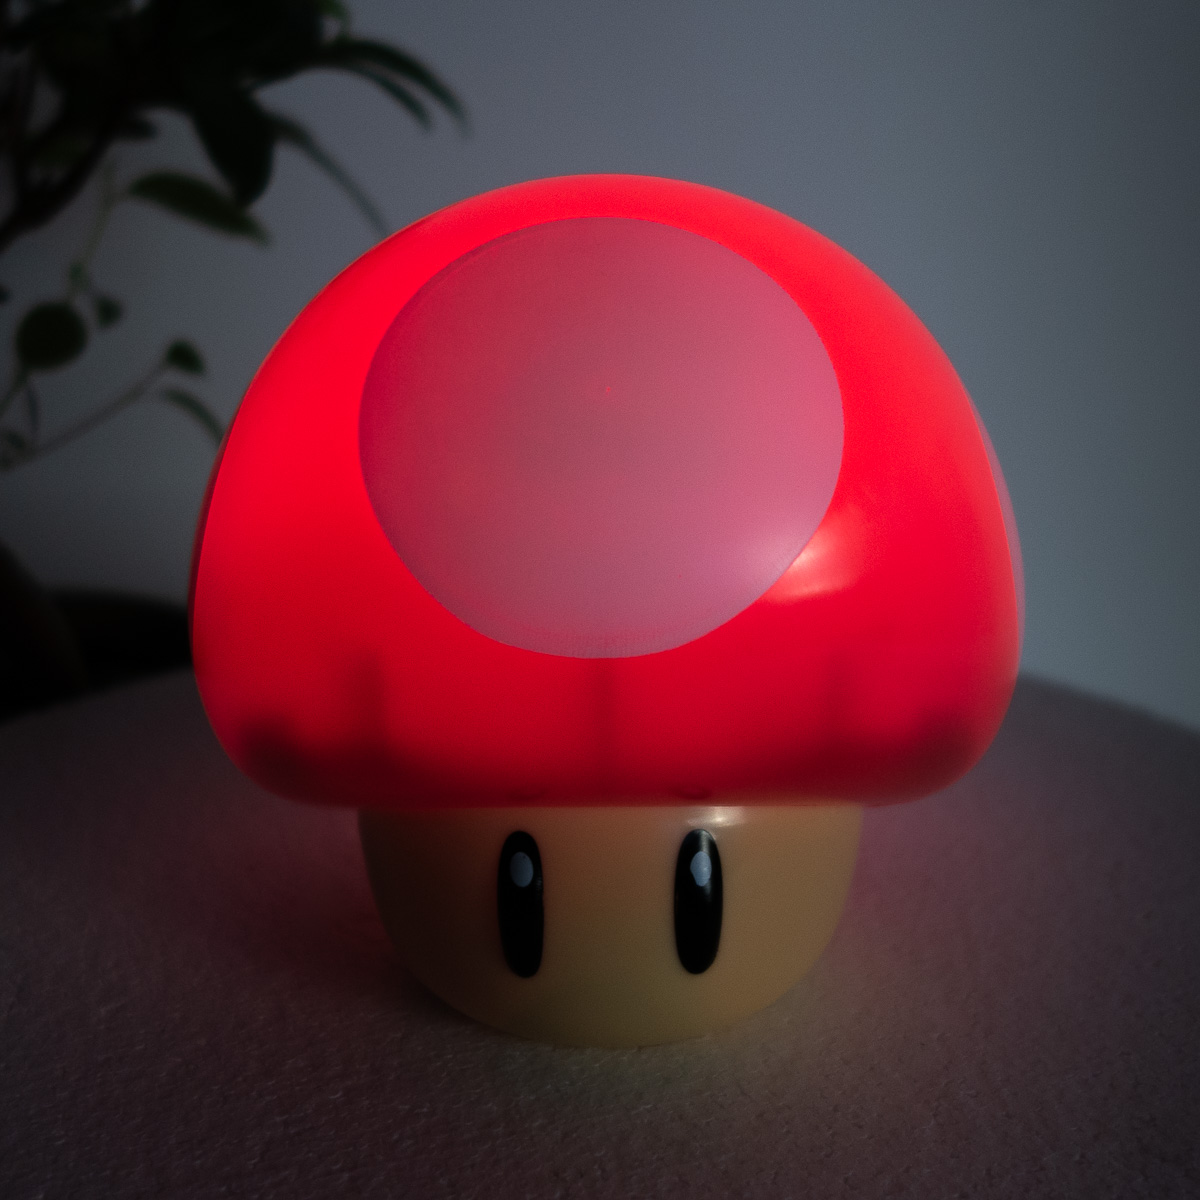 Super Mario paddenstoel lamp